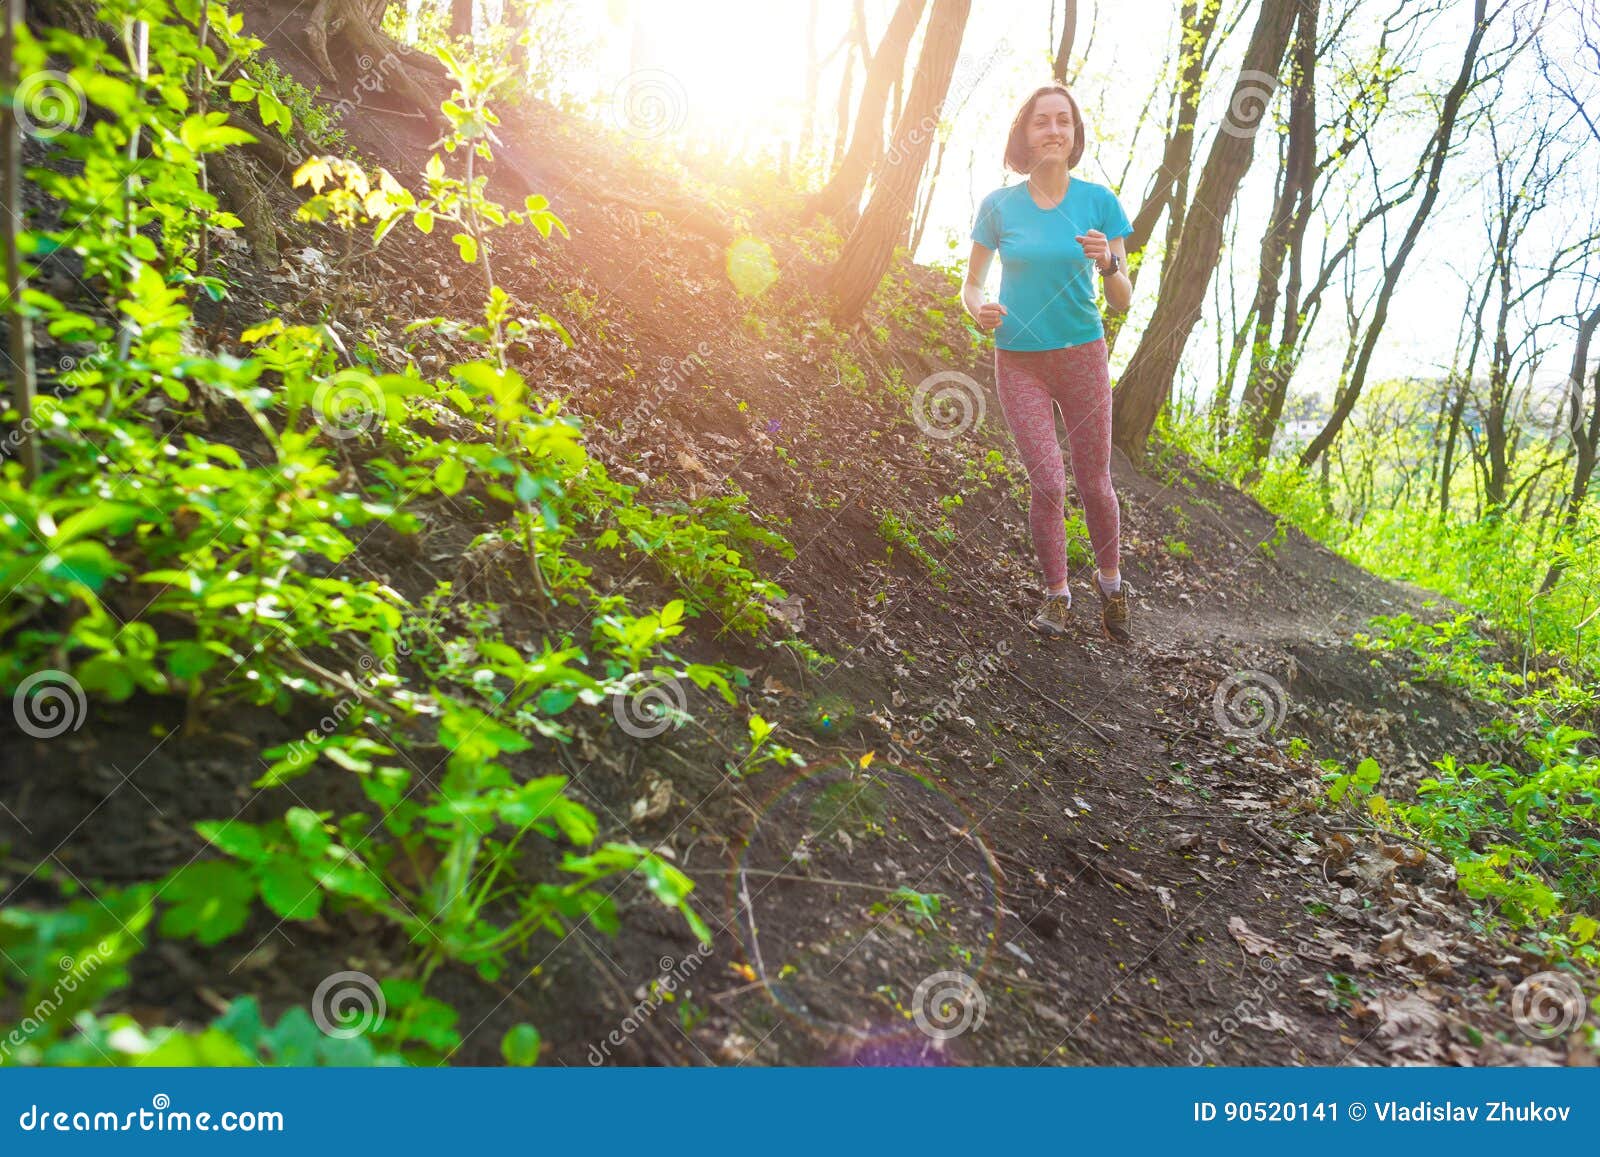 Girl running in the woods. stock image. Image of girl - 90520141